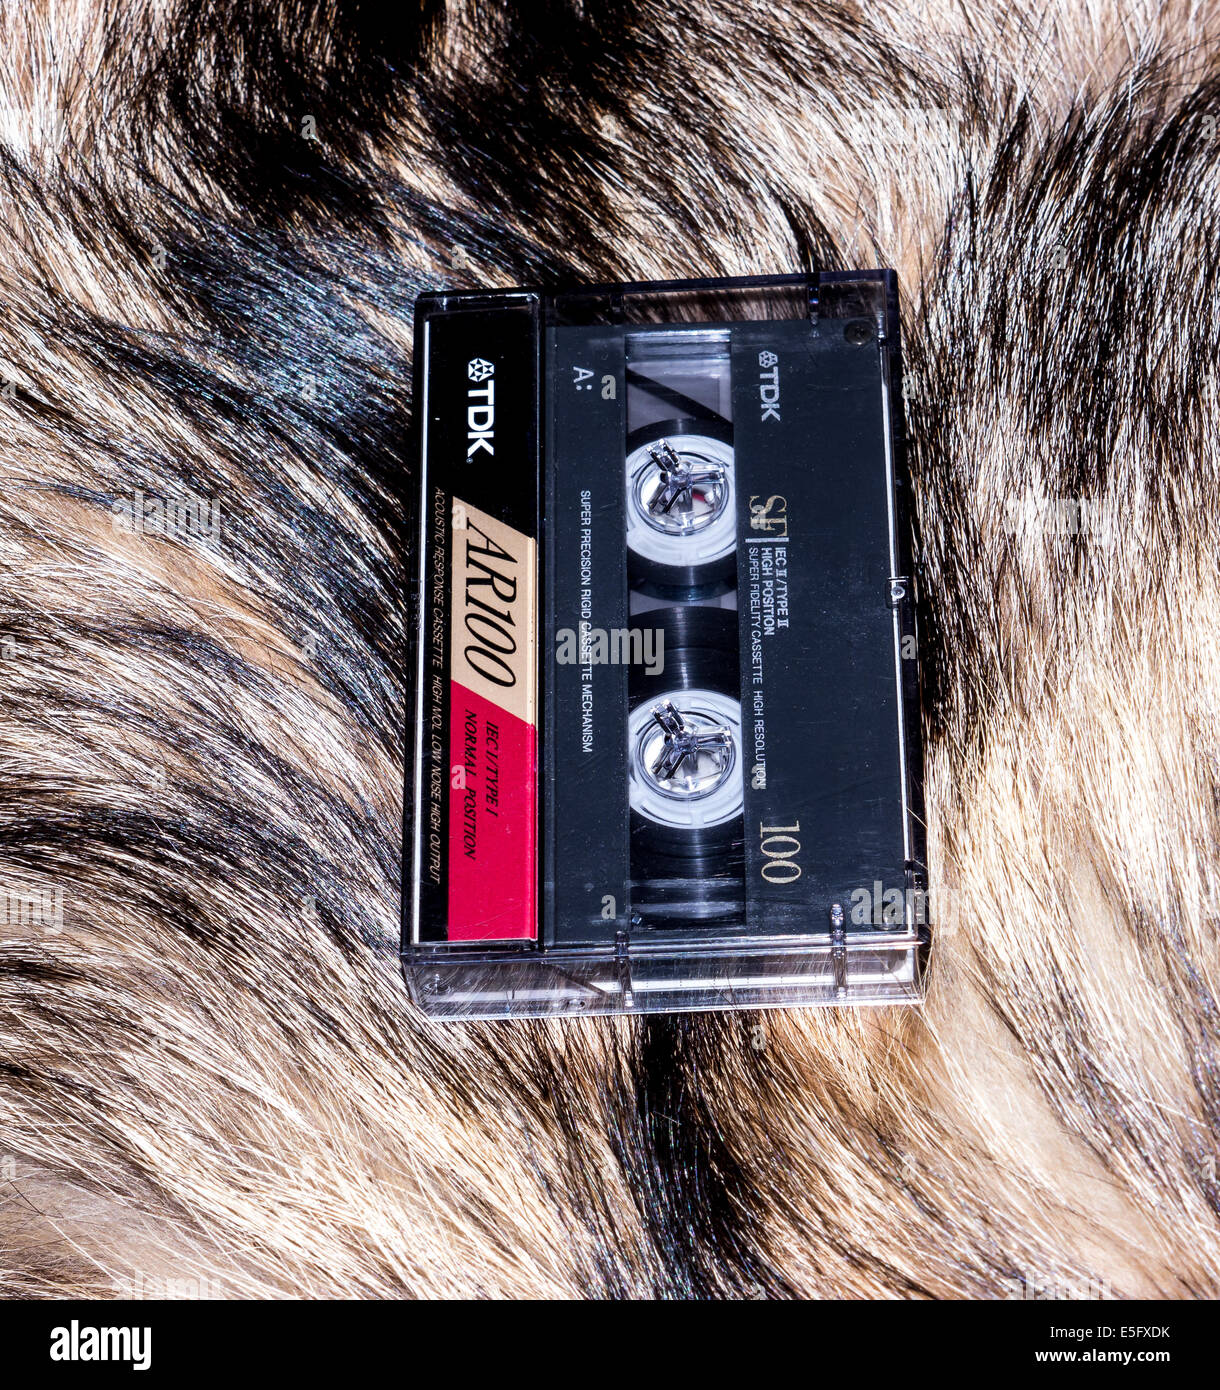 GOMEL, BELARUS - JUNE 11, 2014: TDK cassette tape  on fur background. TDK Corporation, is a Japanese multinational electronics c Stock Photo